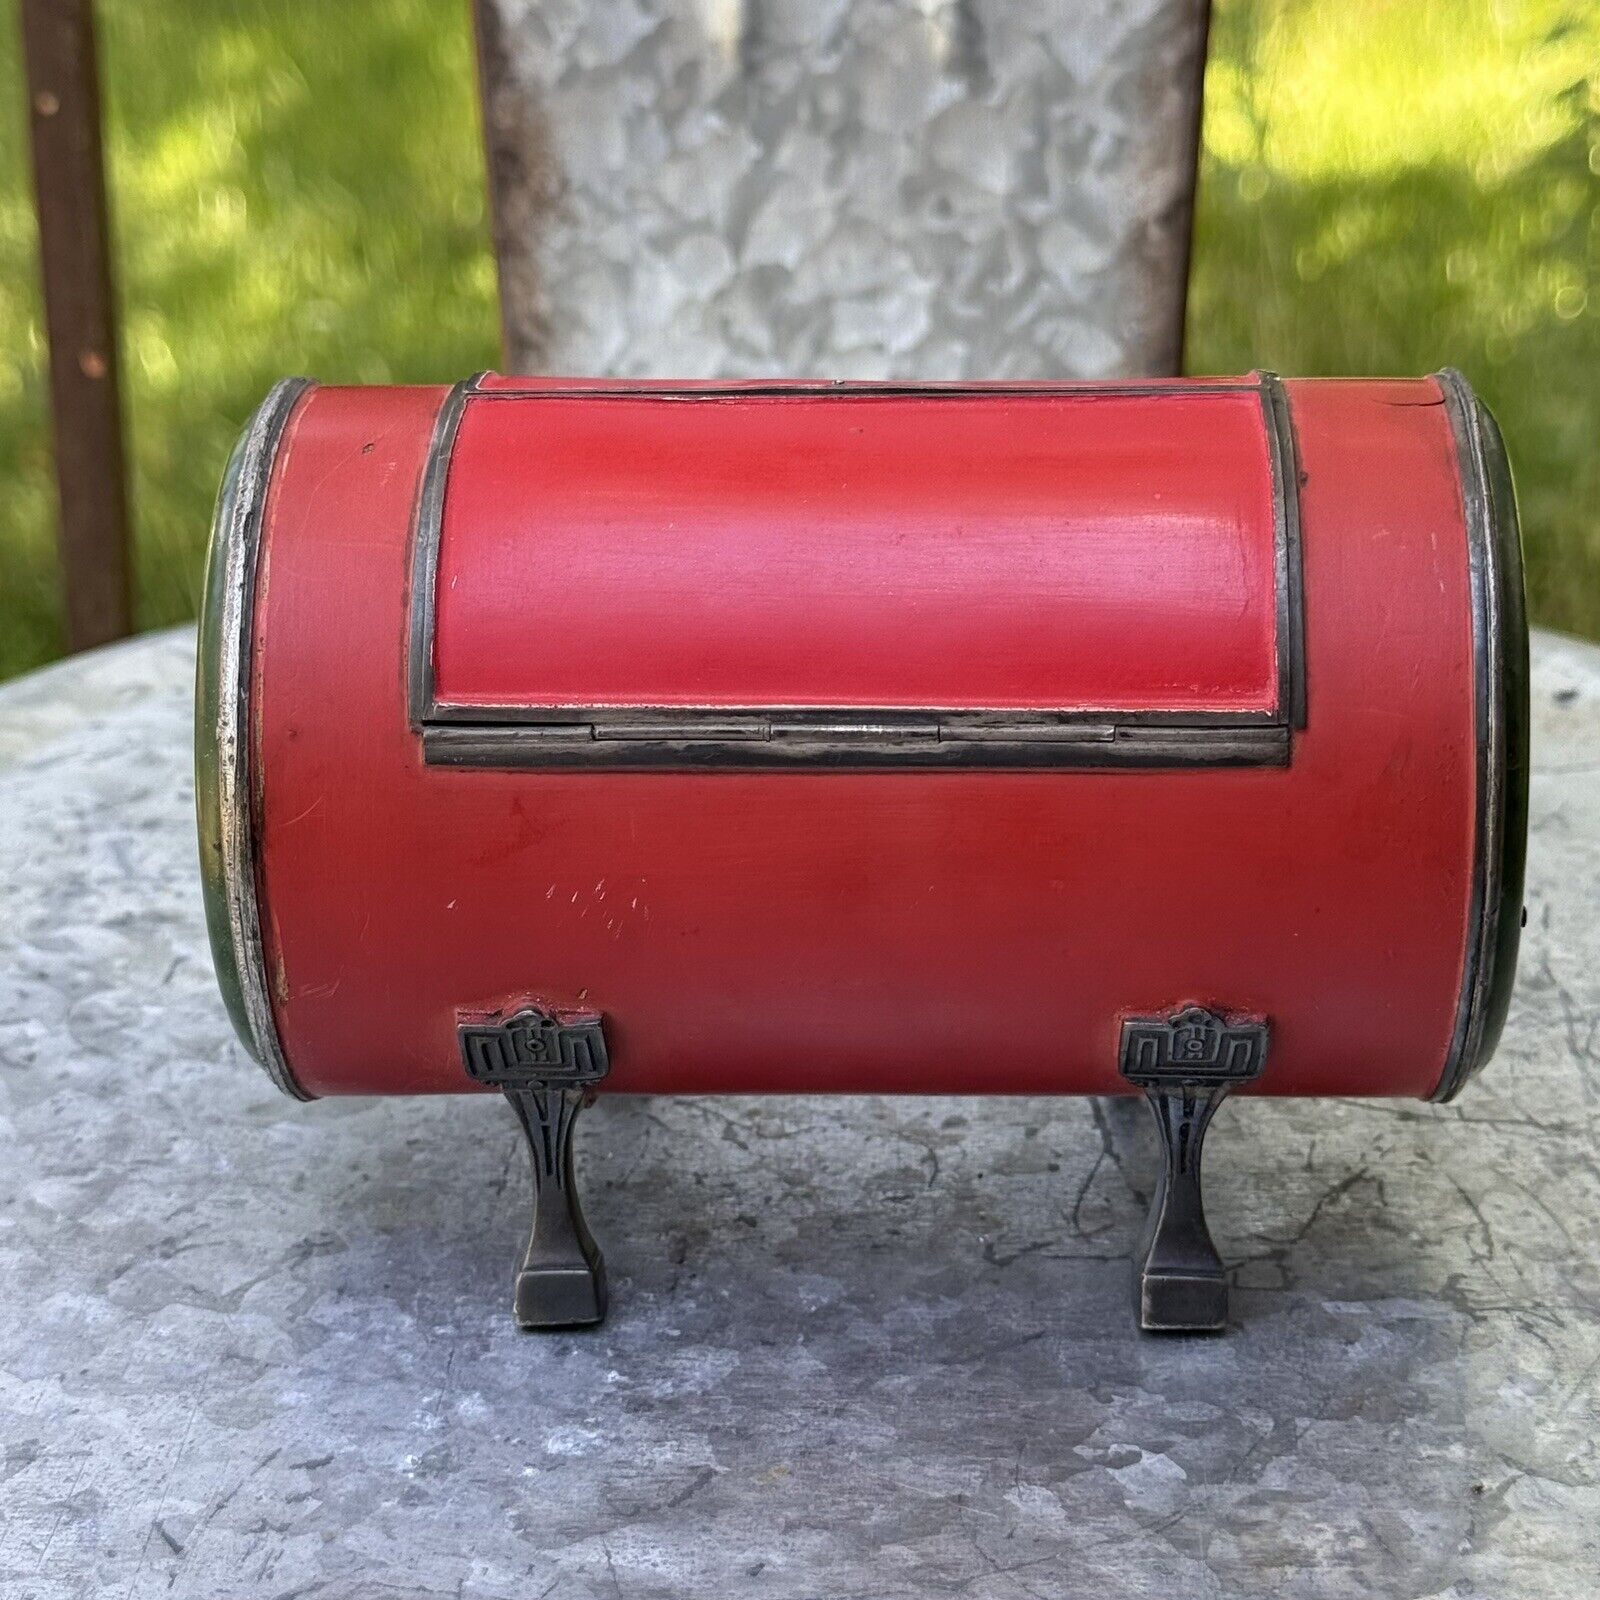 VTG Red Enamel Humidor, Cylinder Cigar Humidor